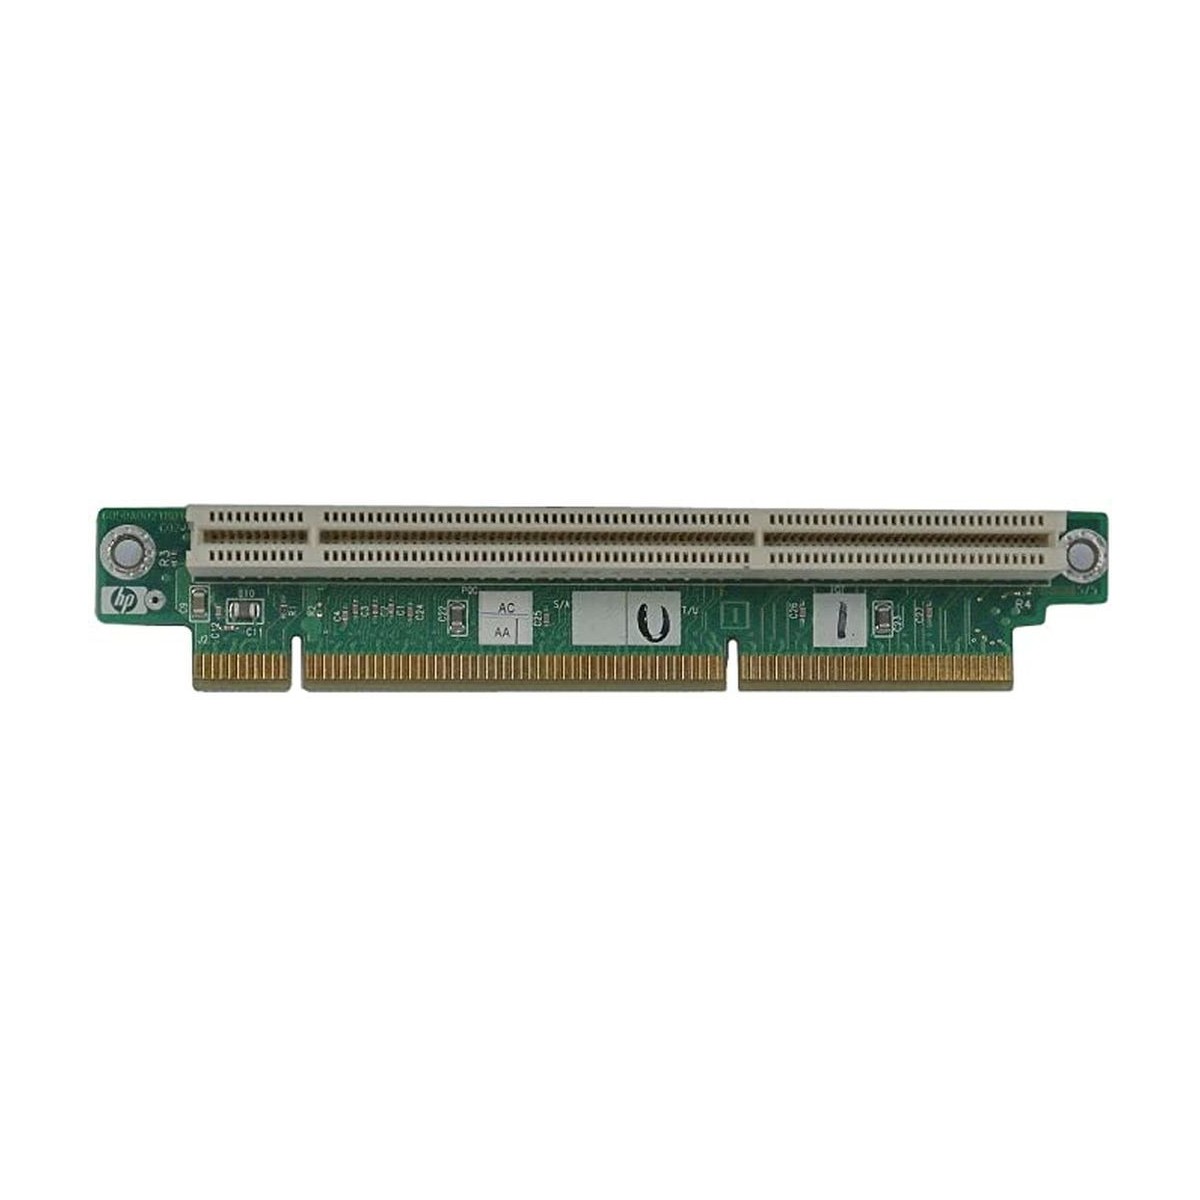 RISER BOARD HP PROLIANT DL360 G3 PCI 305442-001